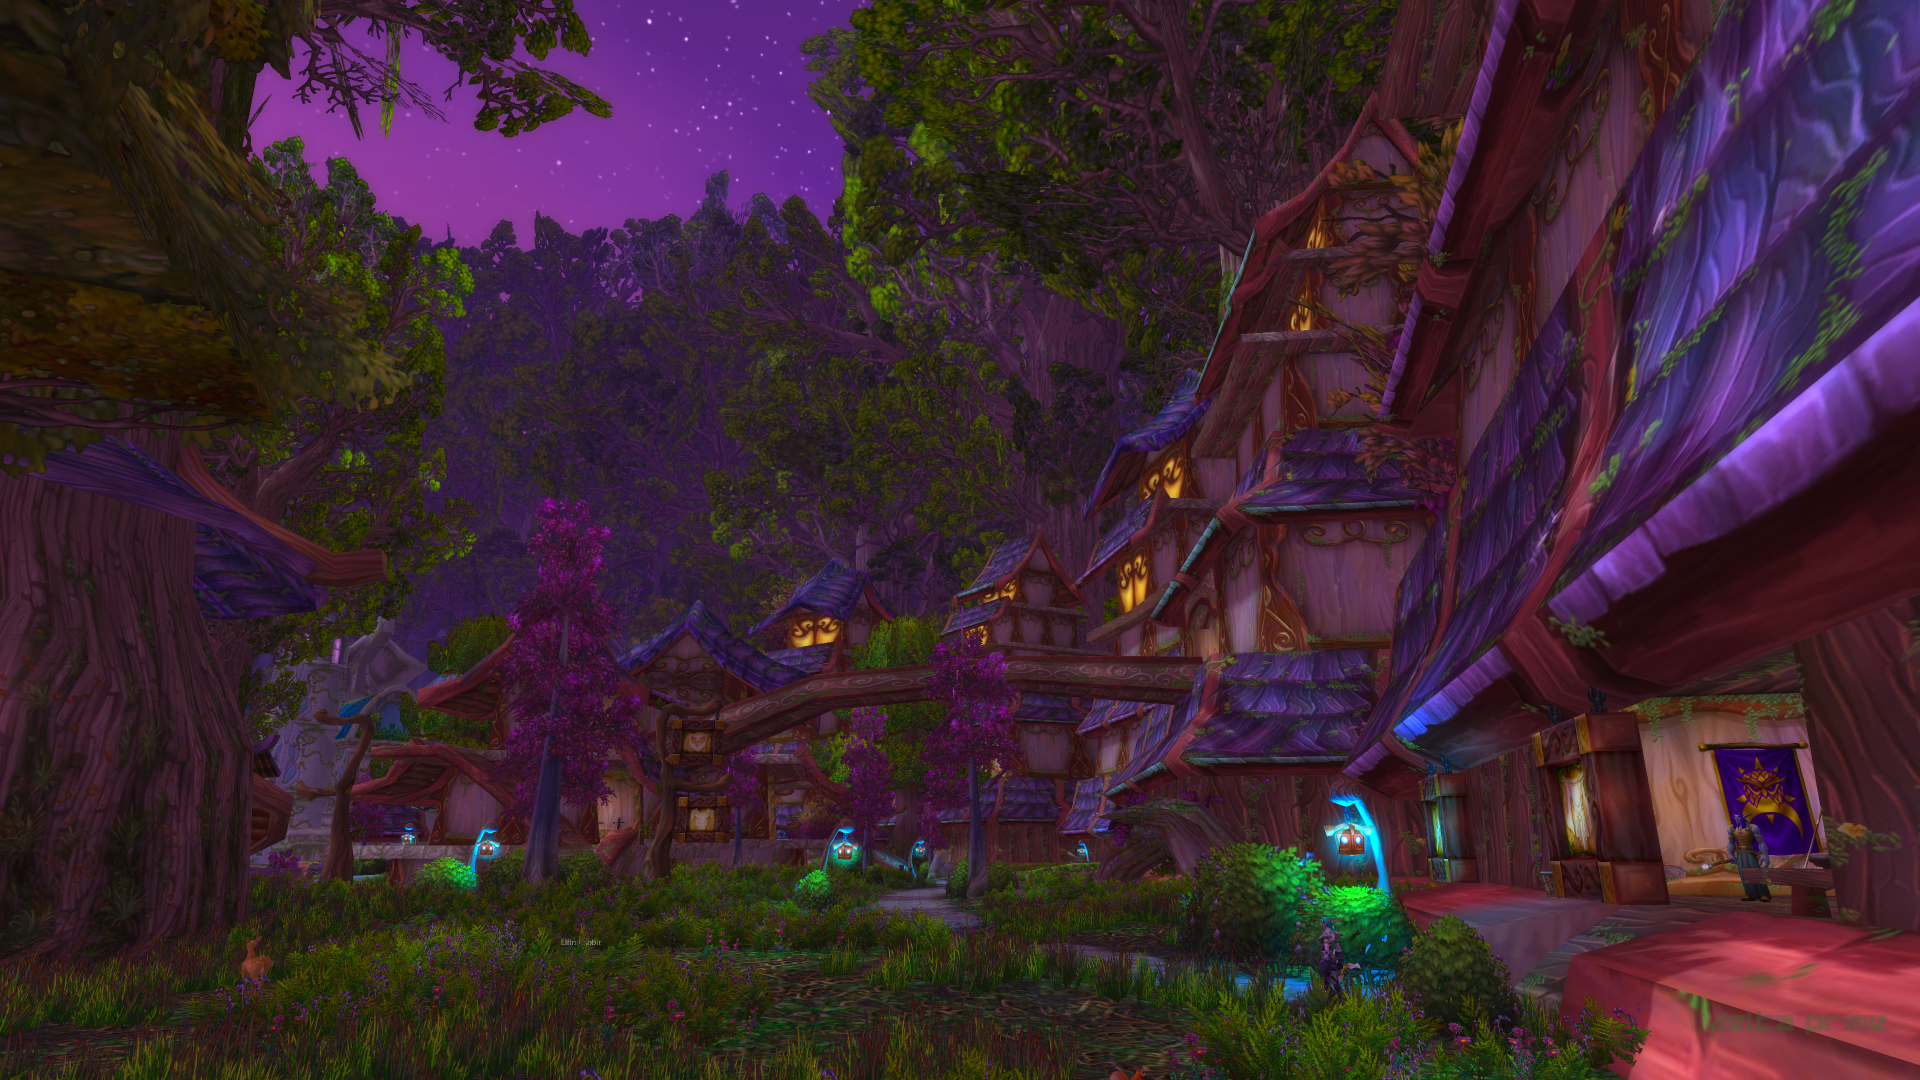 General 1920x1080 World of Warcraft Darnassus Teldrassil night elves screen shot forest night